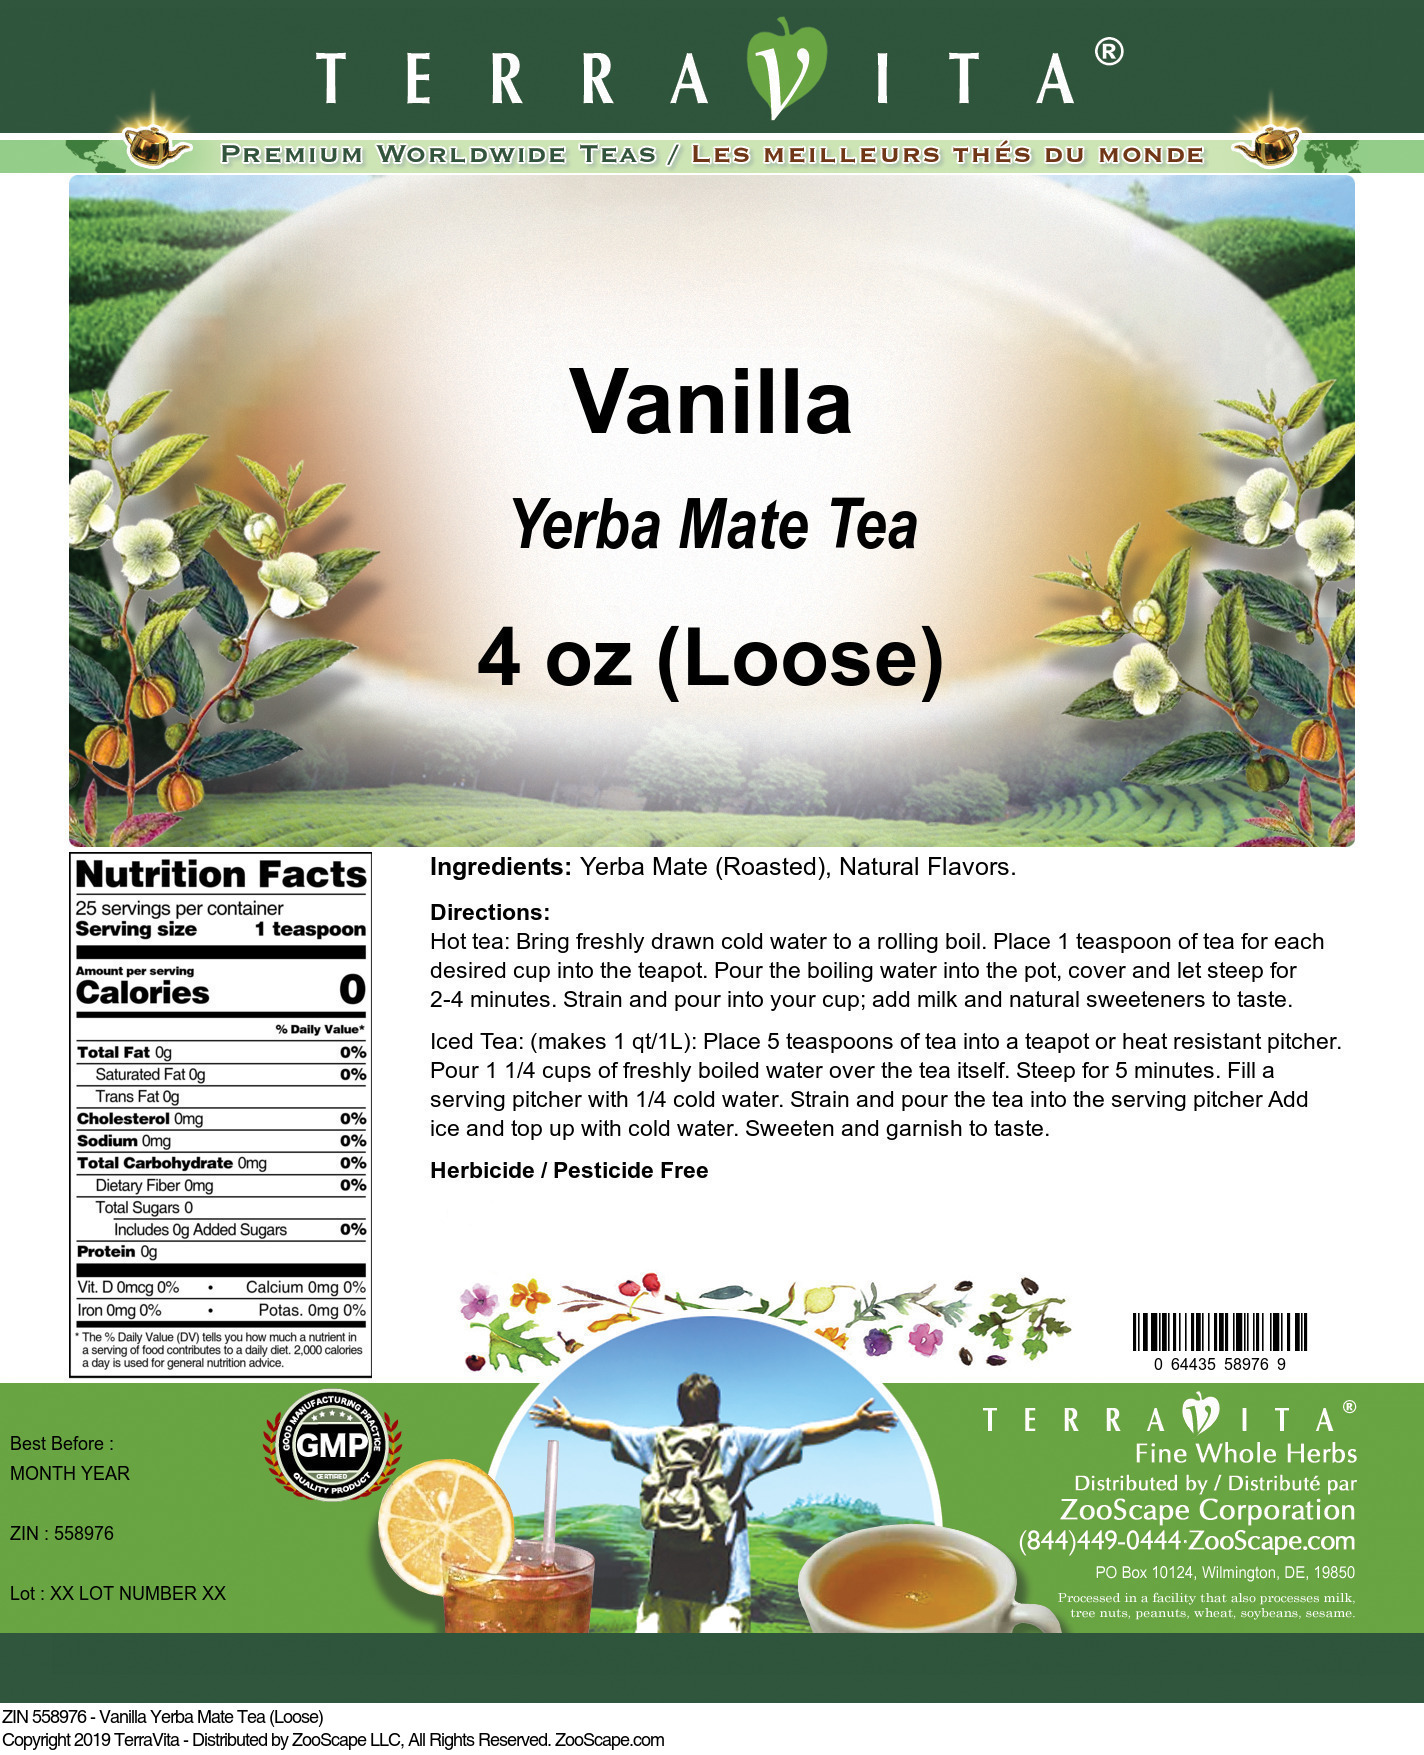 Vanilla Yerba Mate Tea (Loose) - Label